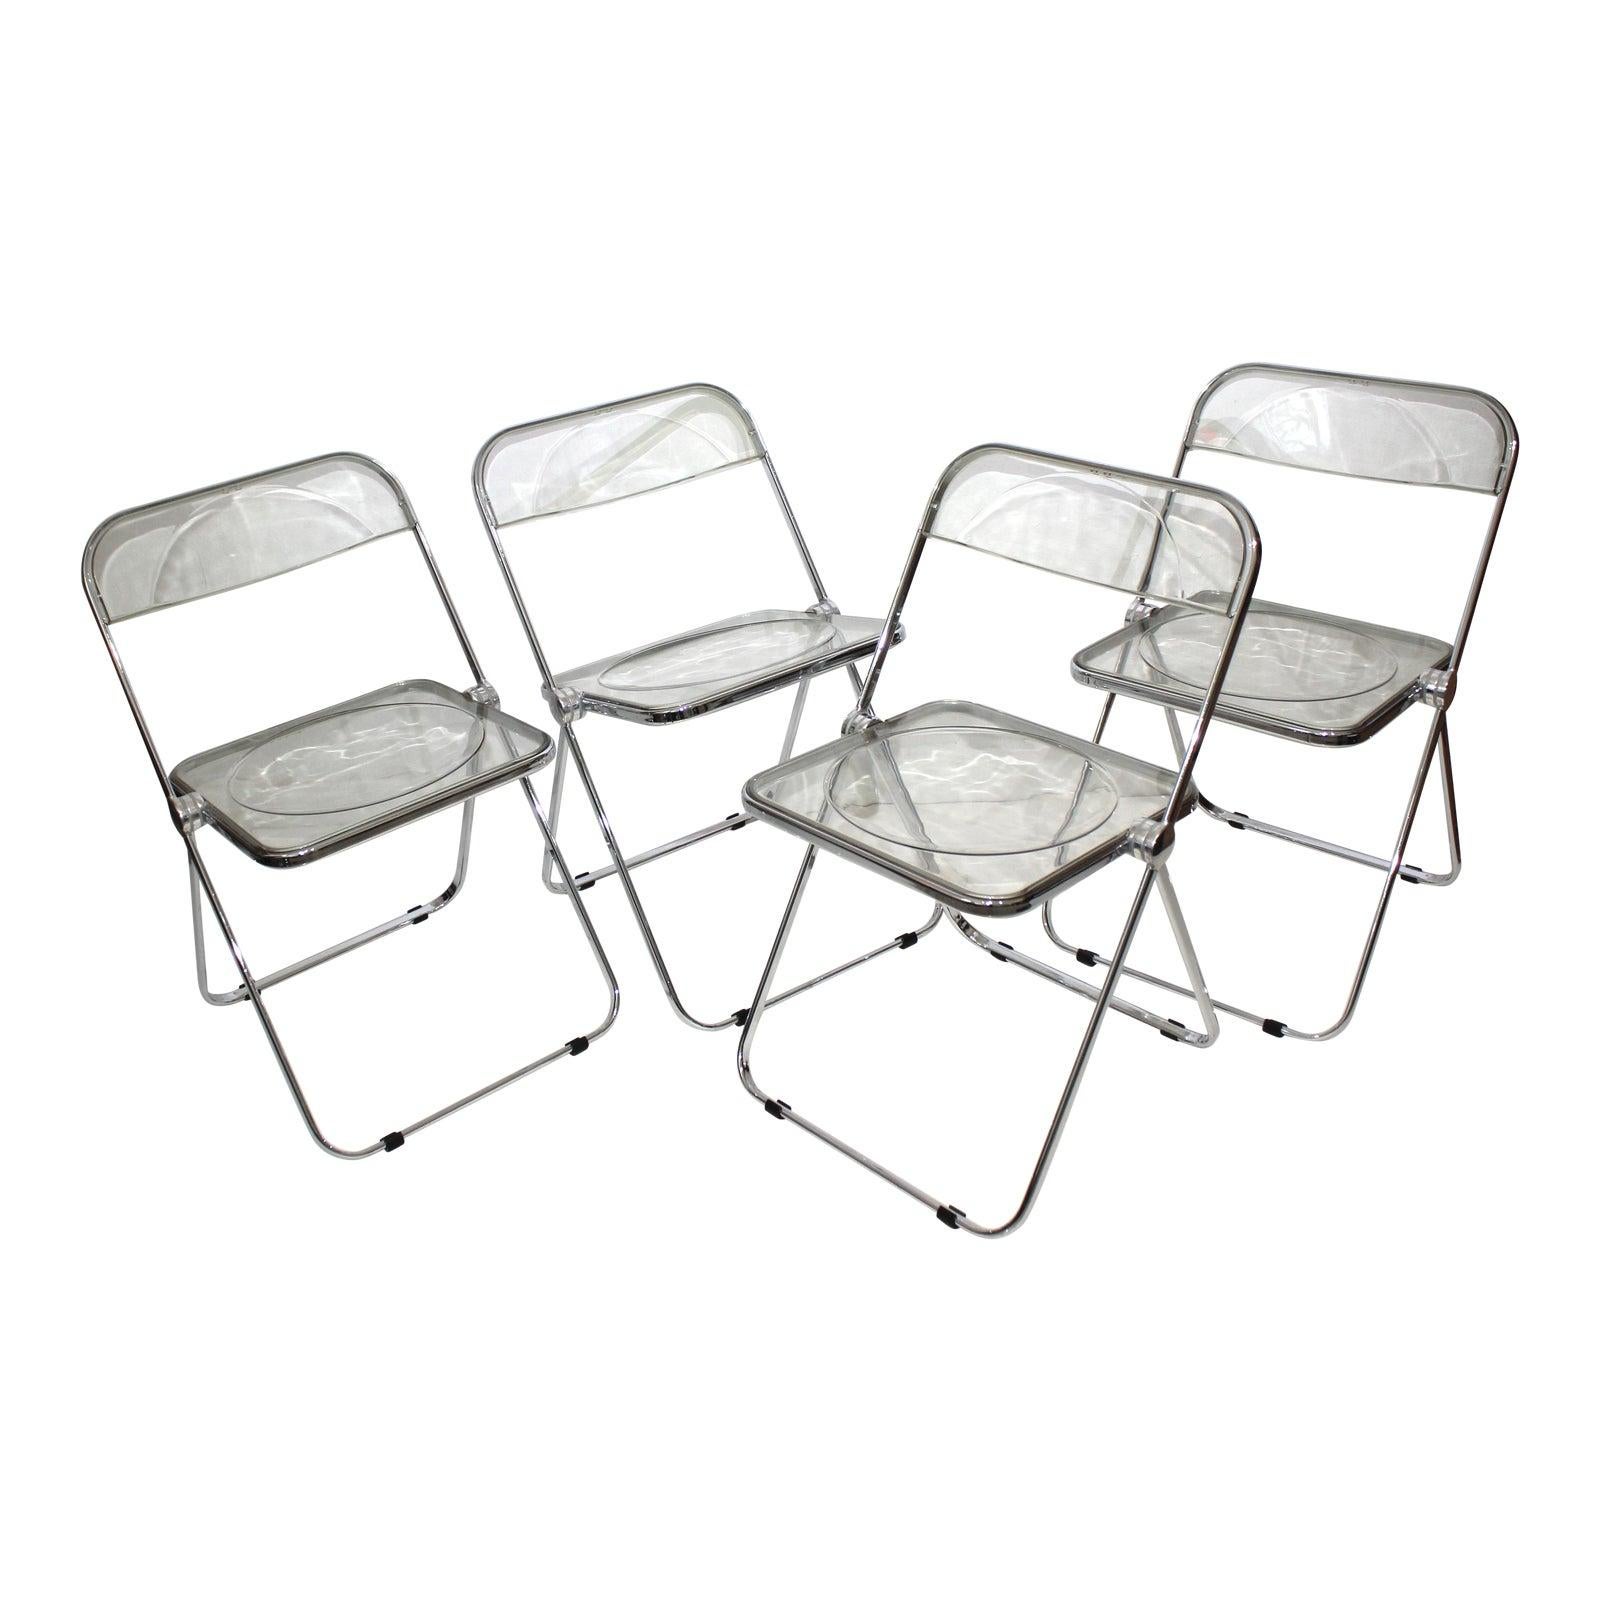 Castelli Plia Folding Chairs, a Set of 4 7